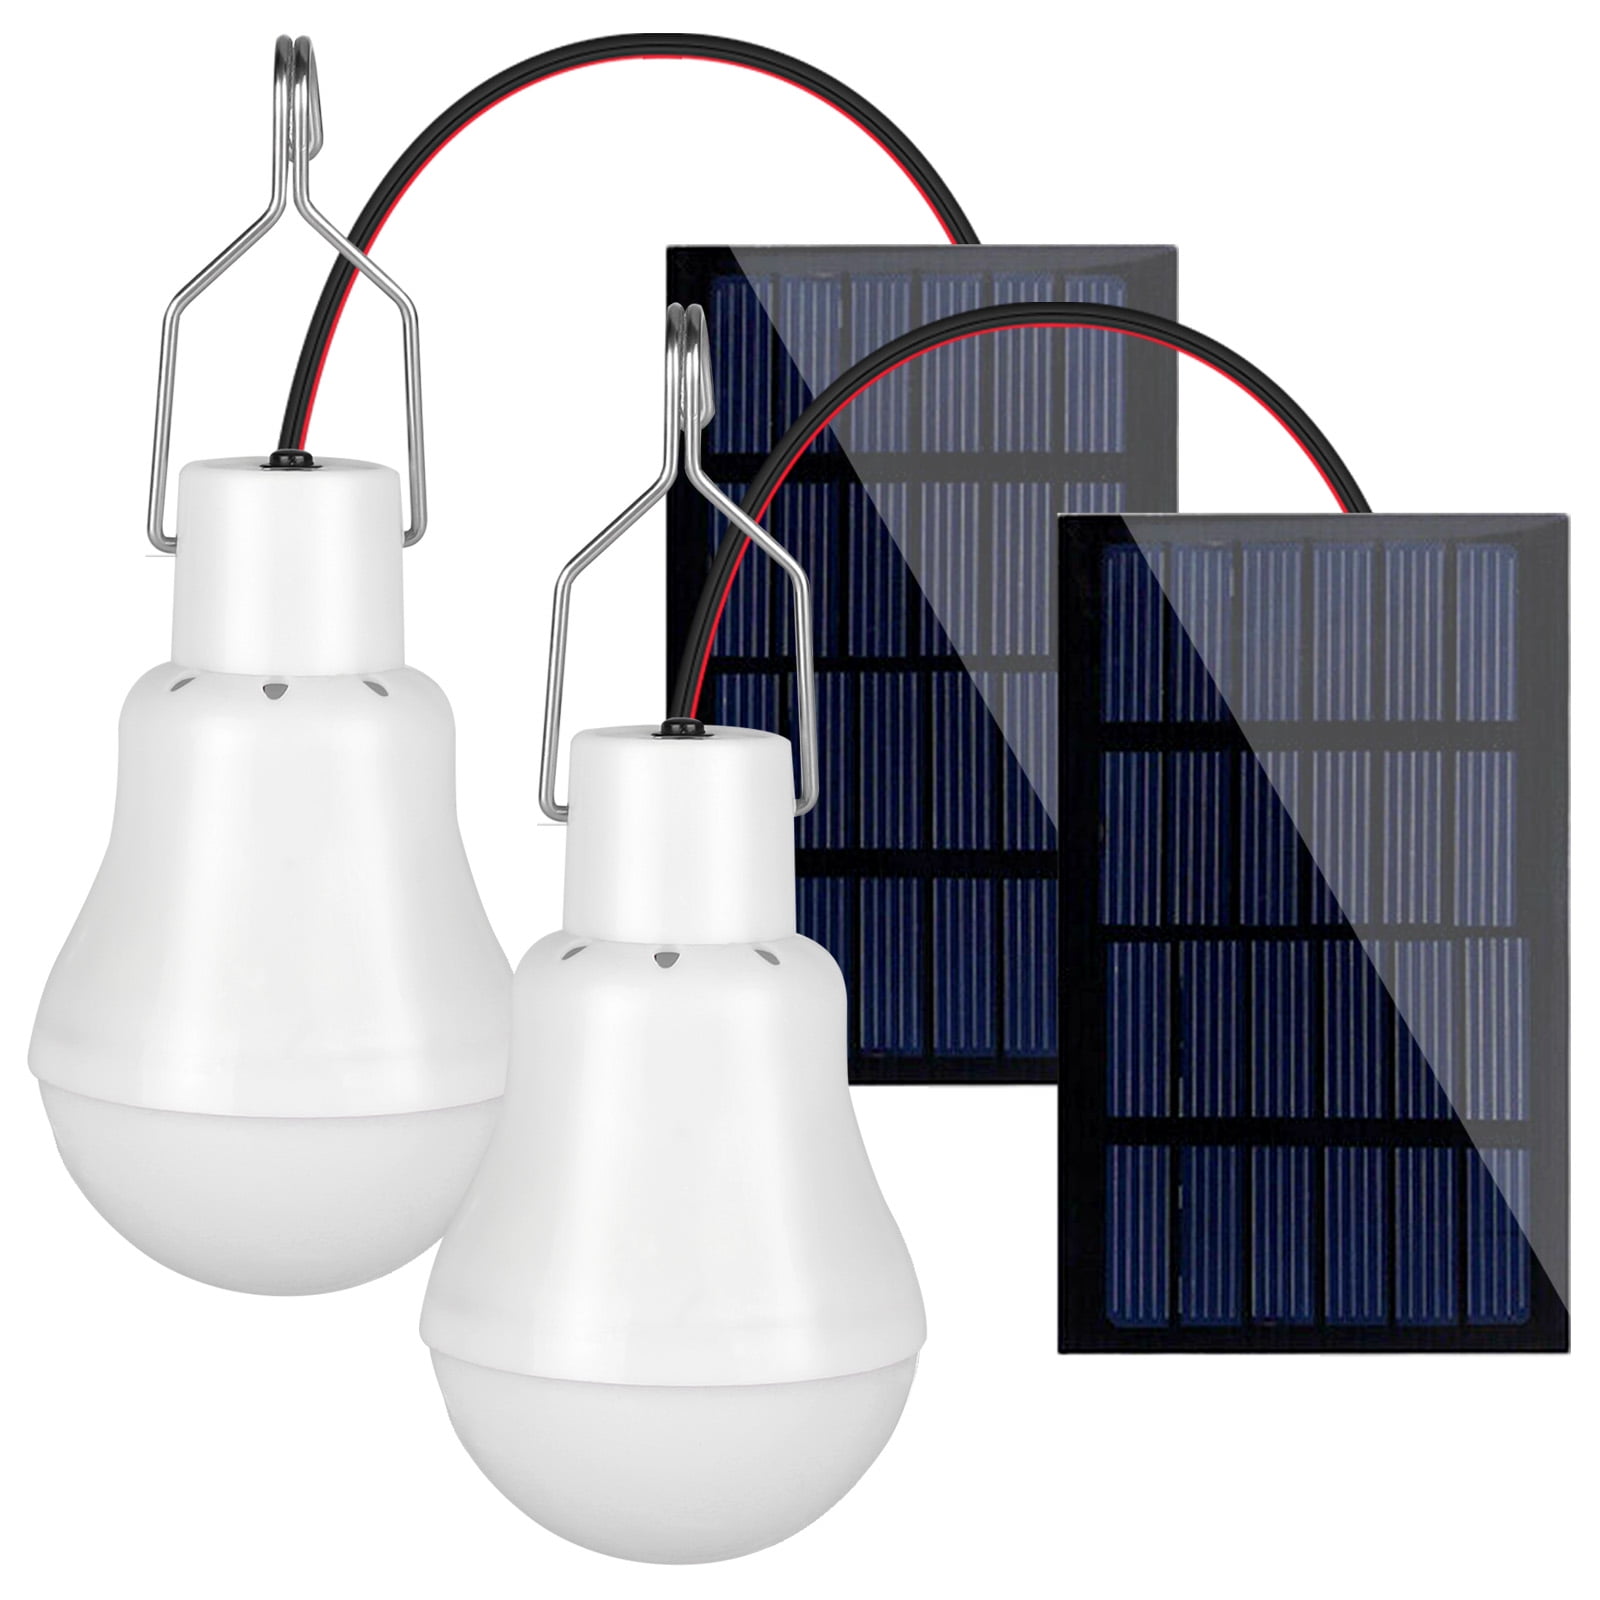 Suaoki Solar Panel Camping LED Lantern - Bed Bath & Beyond - 28149222